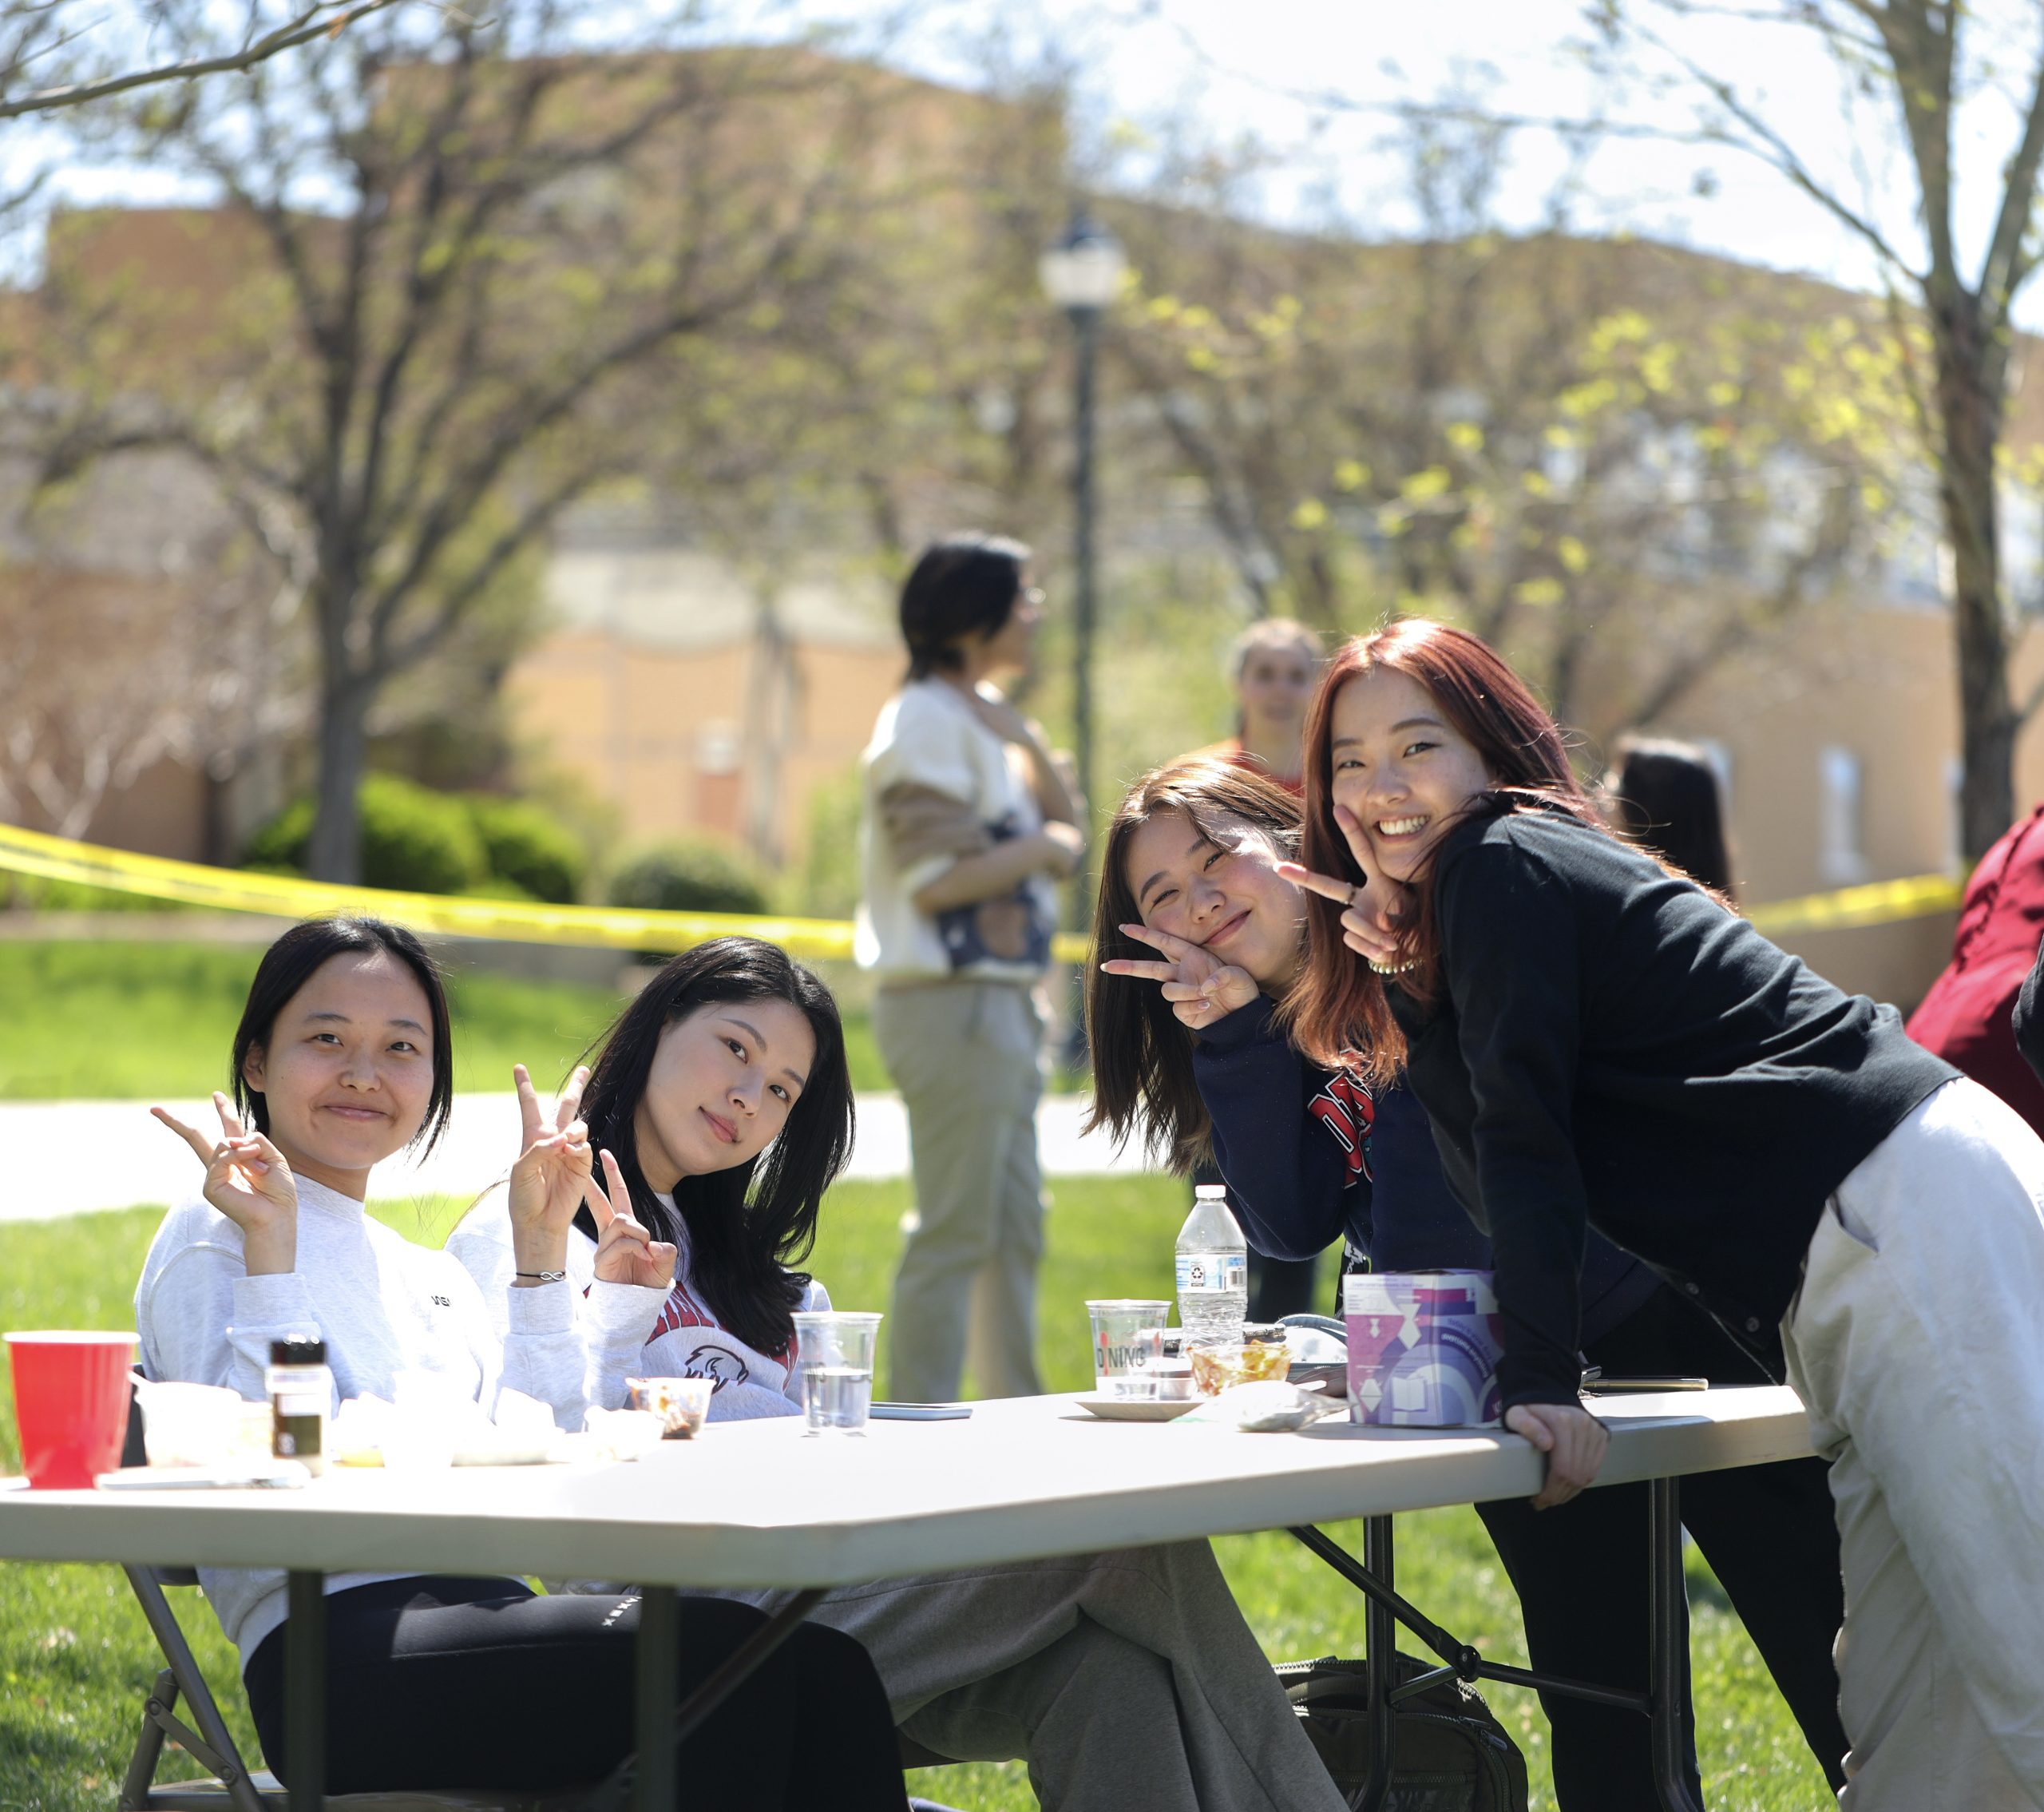 Diversity week recognizes diverse communities at DSU